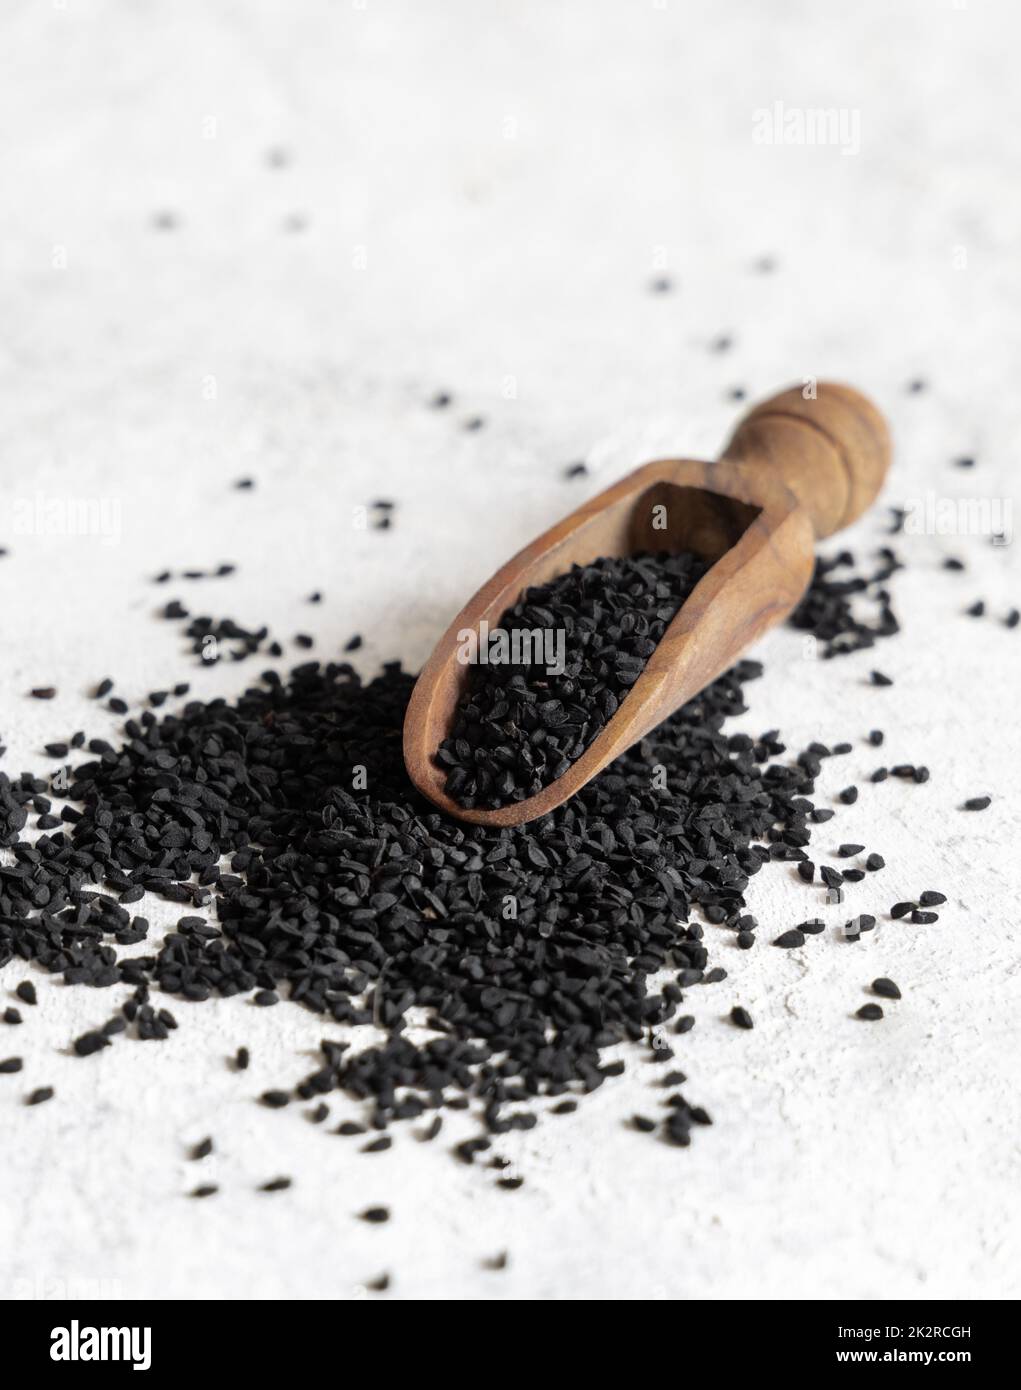 Wooden scoop of Indian spice Black cumin (nigella sativa or kalonji) seeds close up Stock Photo